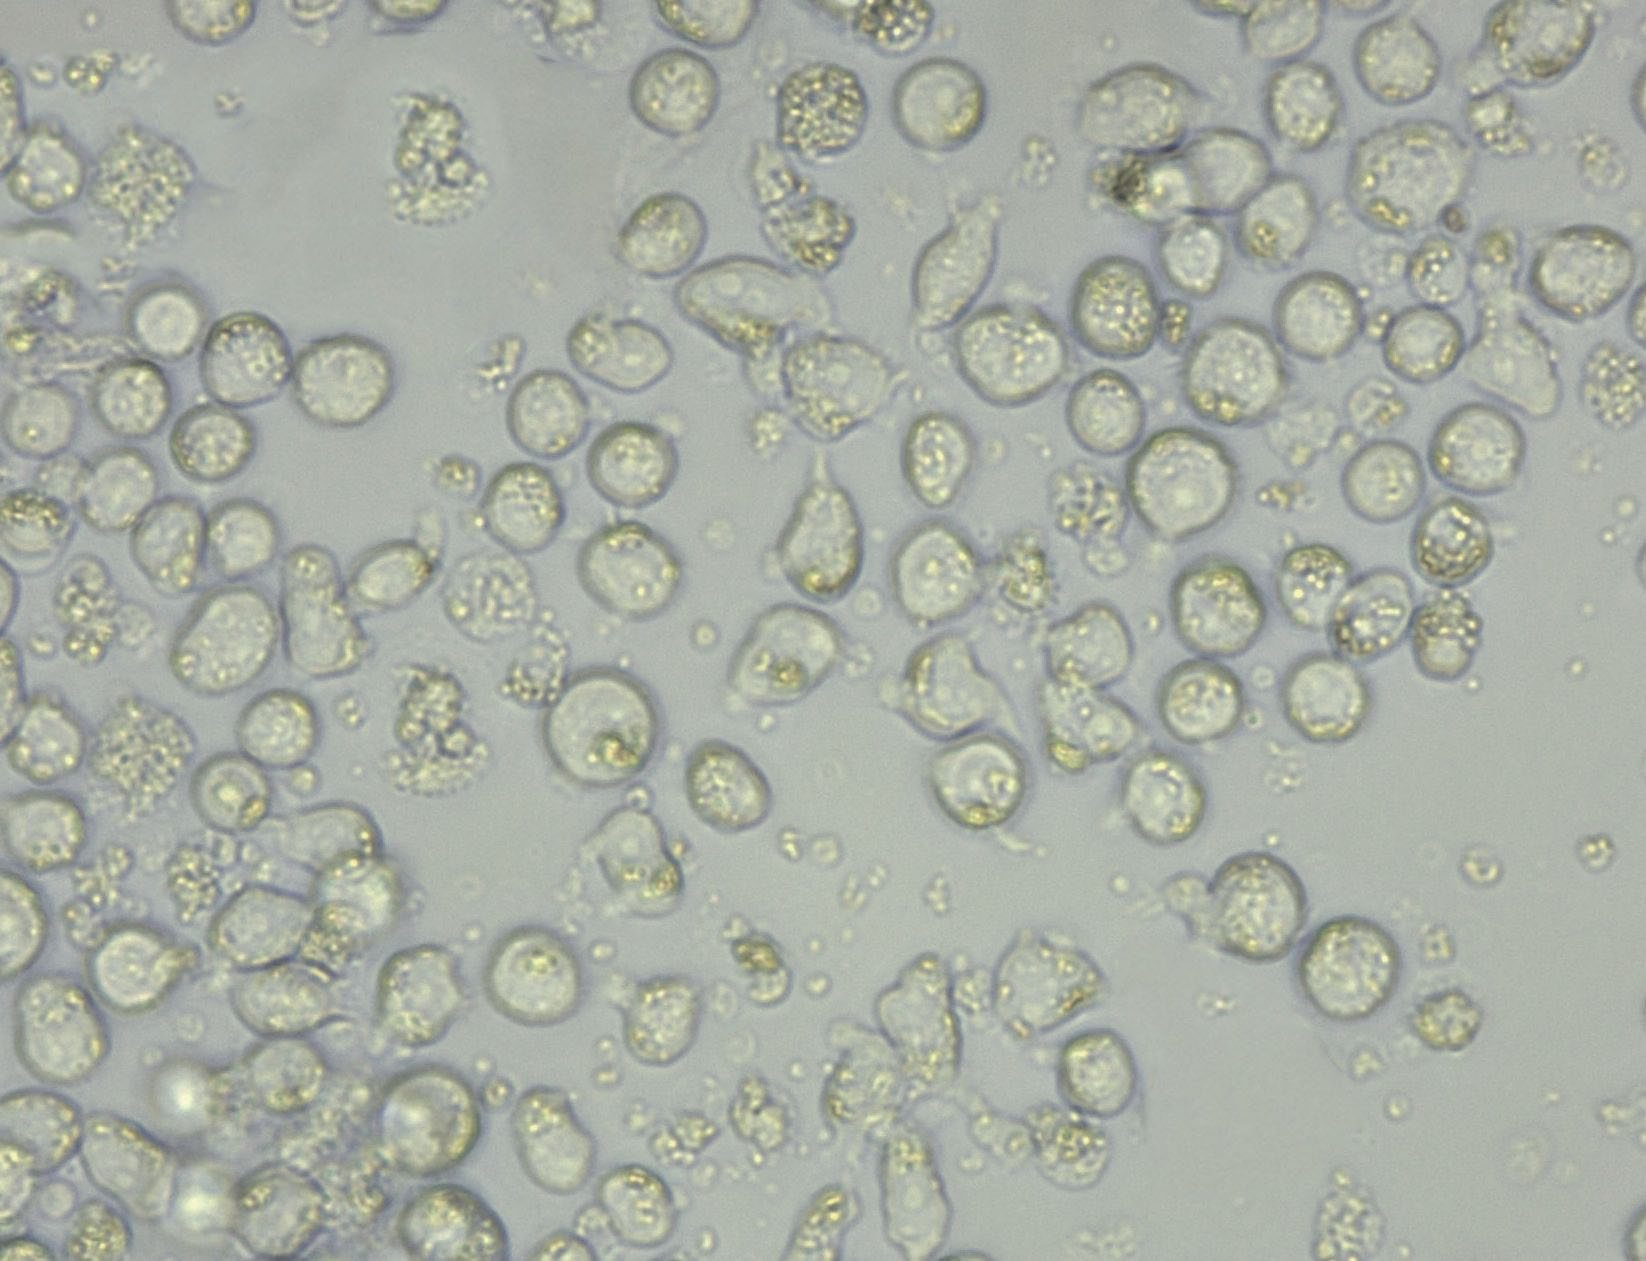 KF链球菌琼脂培养基基础,KF Streptococcus Agar